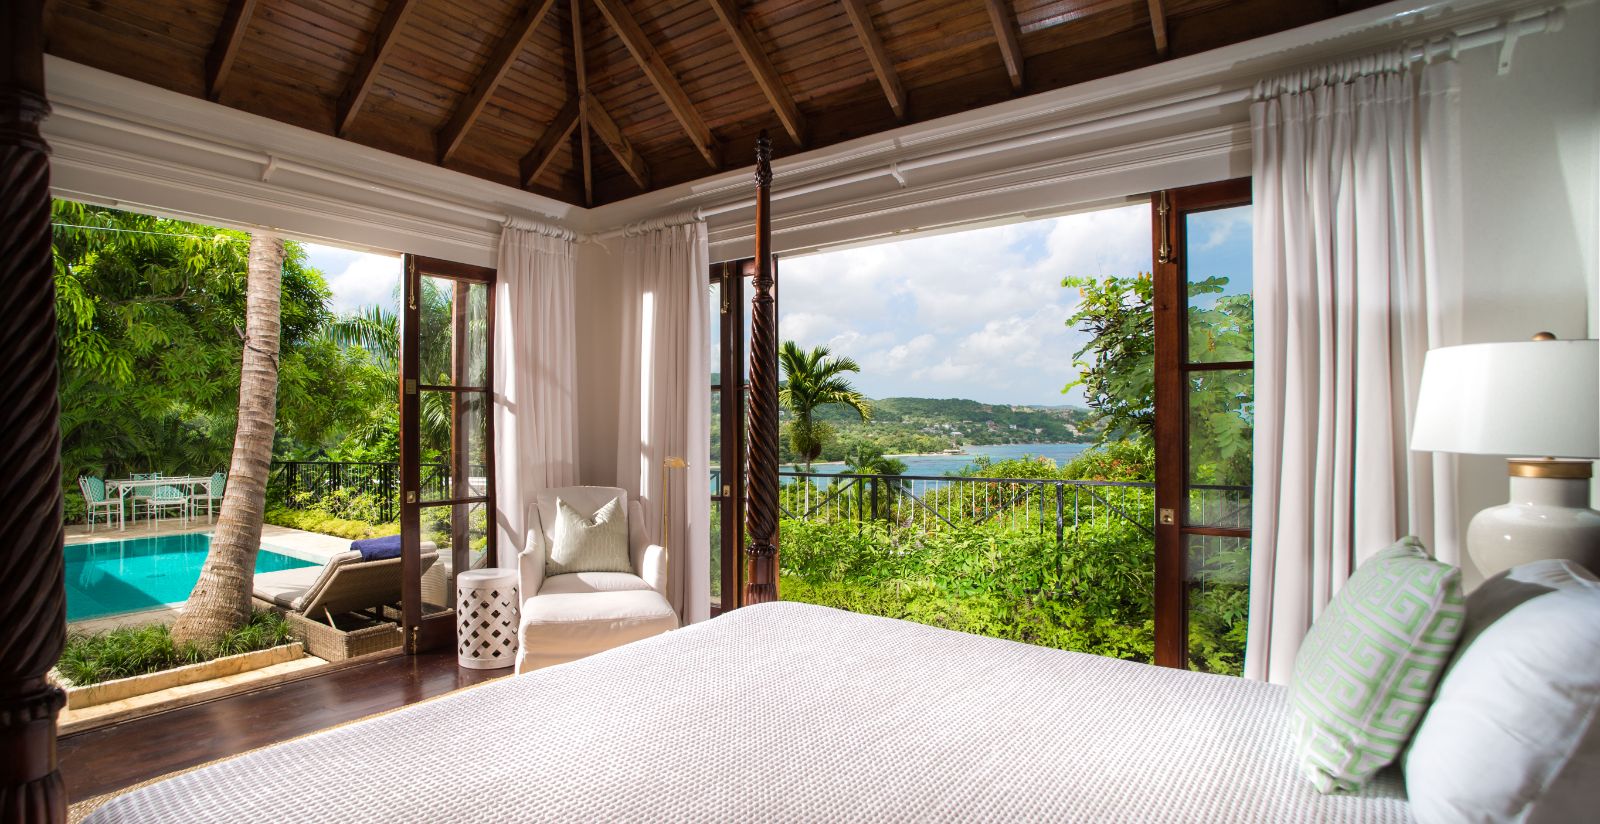 Bedroom view of a villa at Round Hill Hotel & Villas in Montego Bay, Jamaica